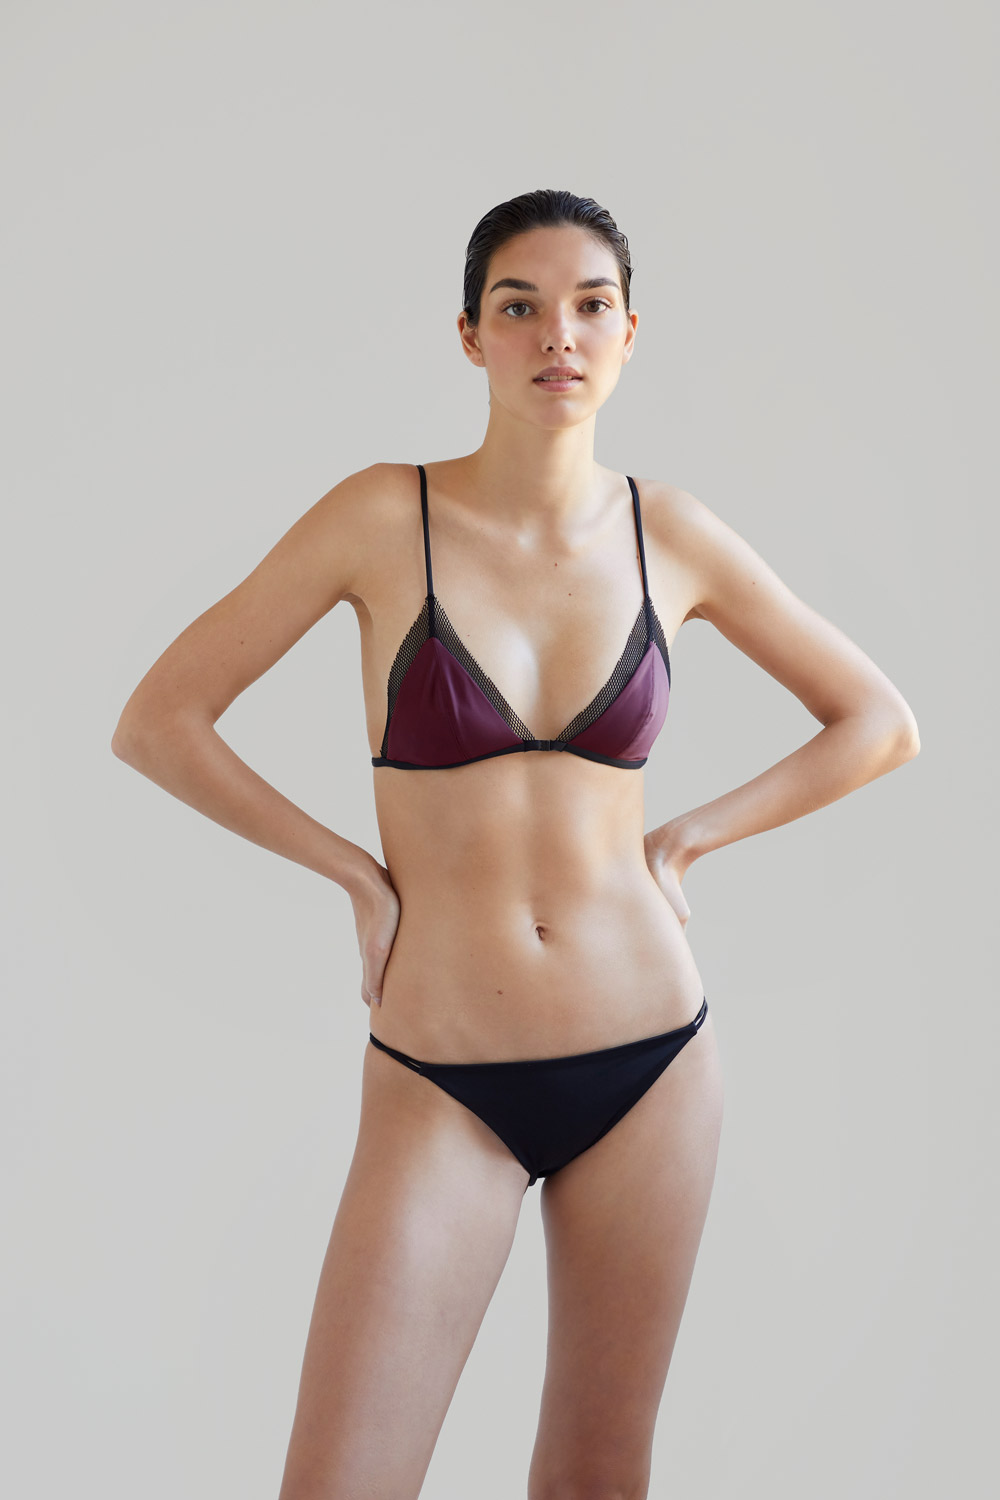 NOW_THEN-Sustainable_Swimwear-Mana top+Milos bottom in plum